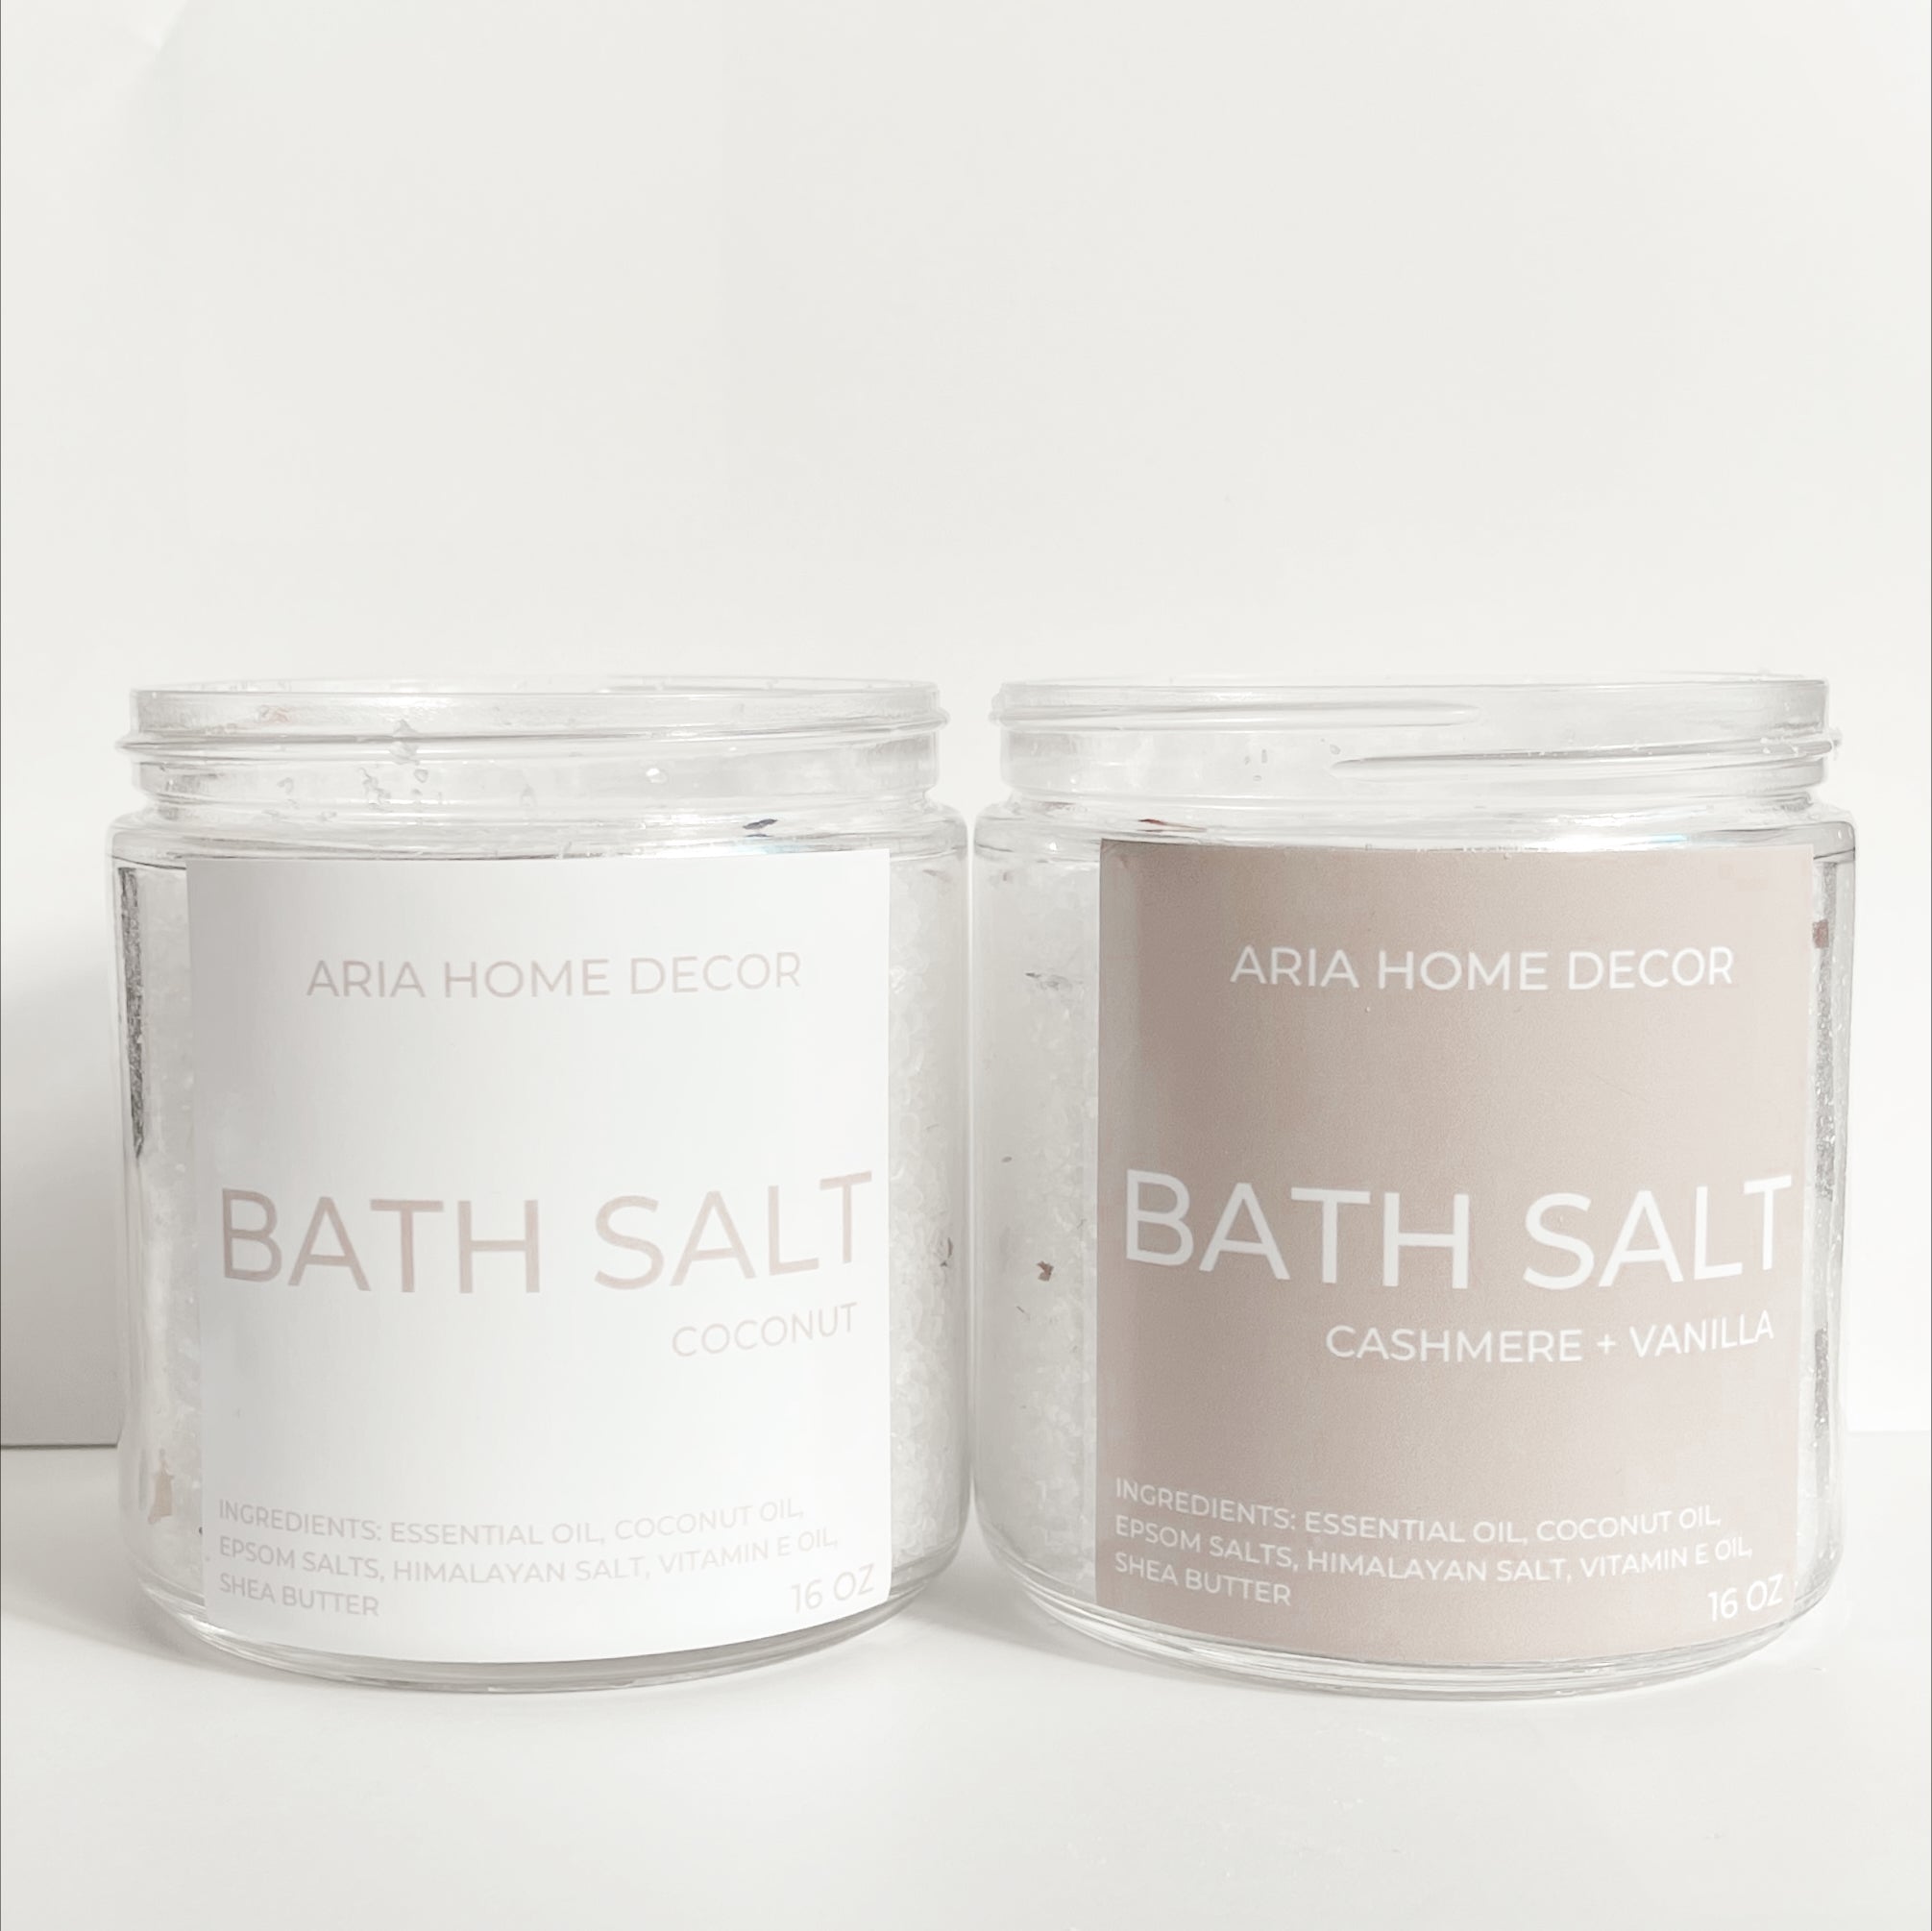 The Bath Salt Soak-0